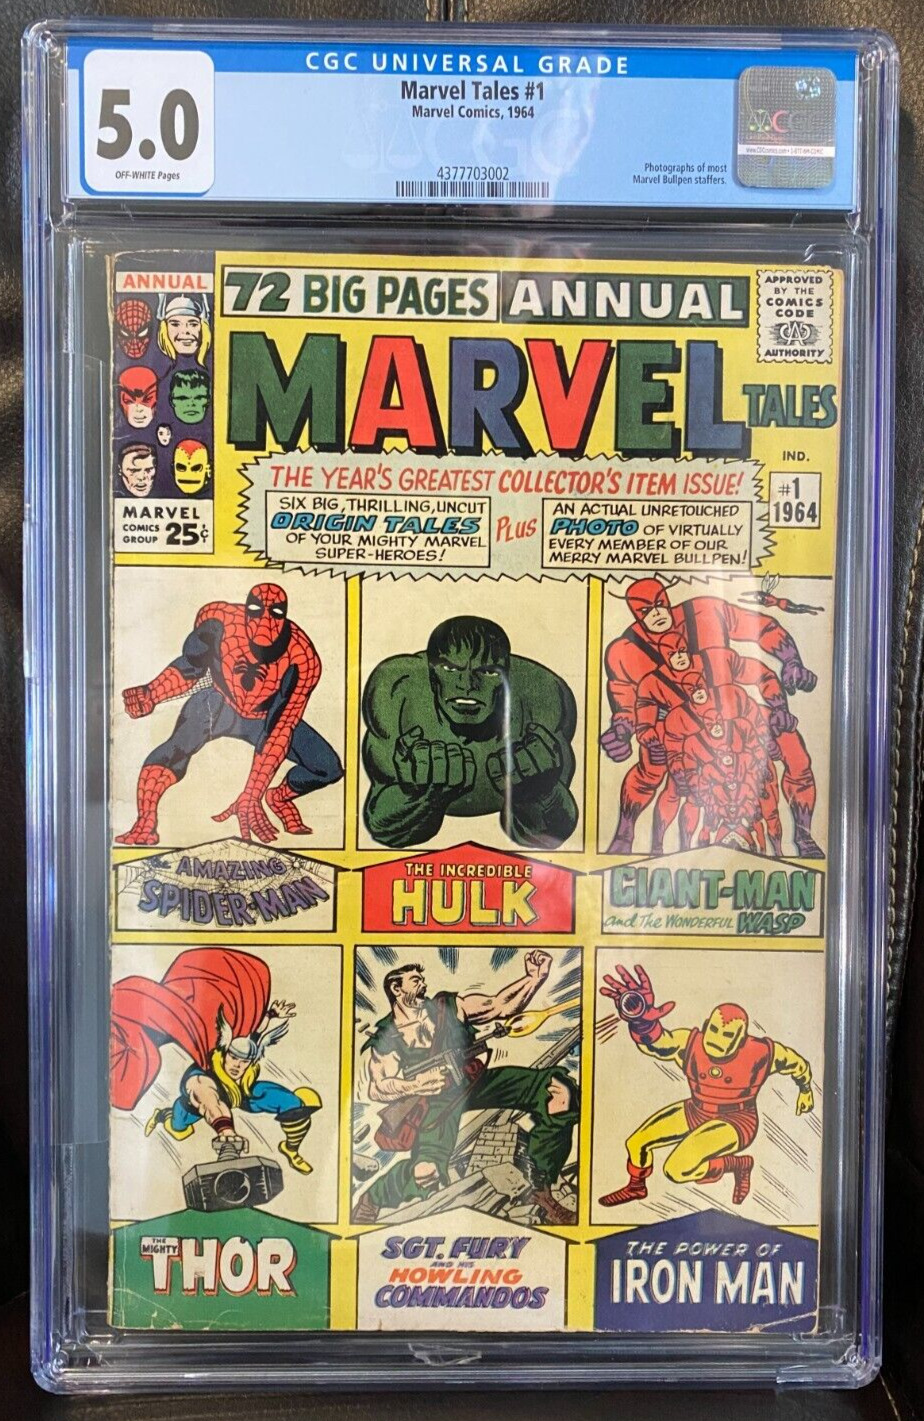 Marvel Tales #1 (1964) CGC 5.0, Spiderman/Hulk/Thor/Iron-Man Origin Stories